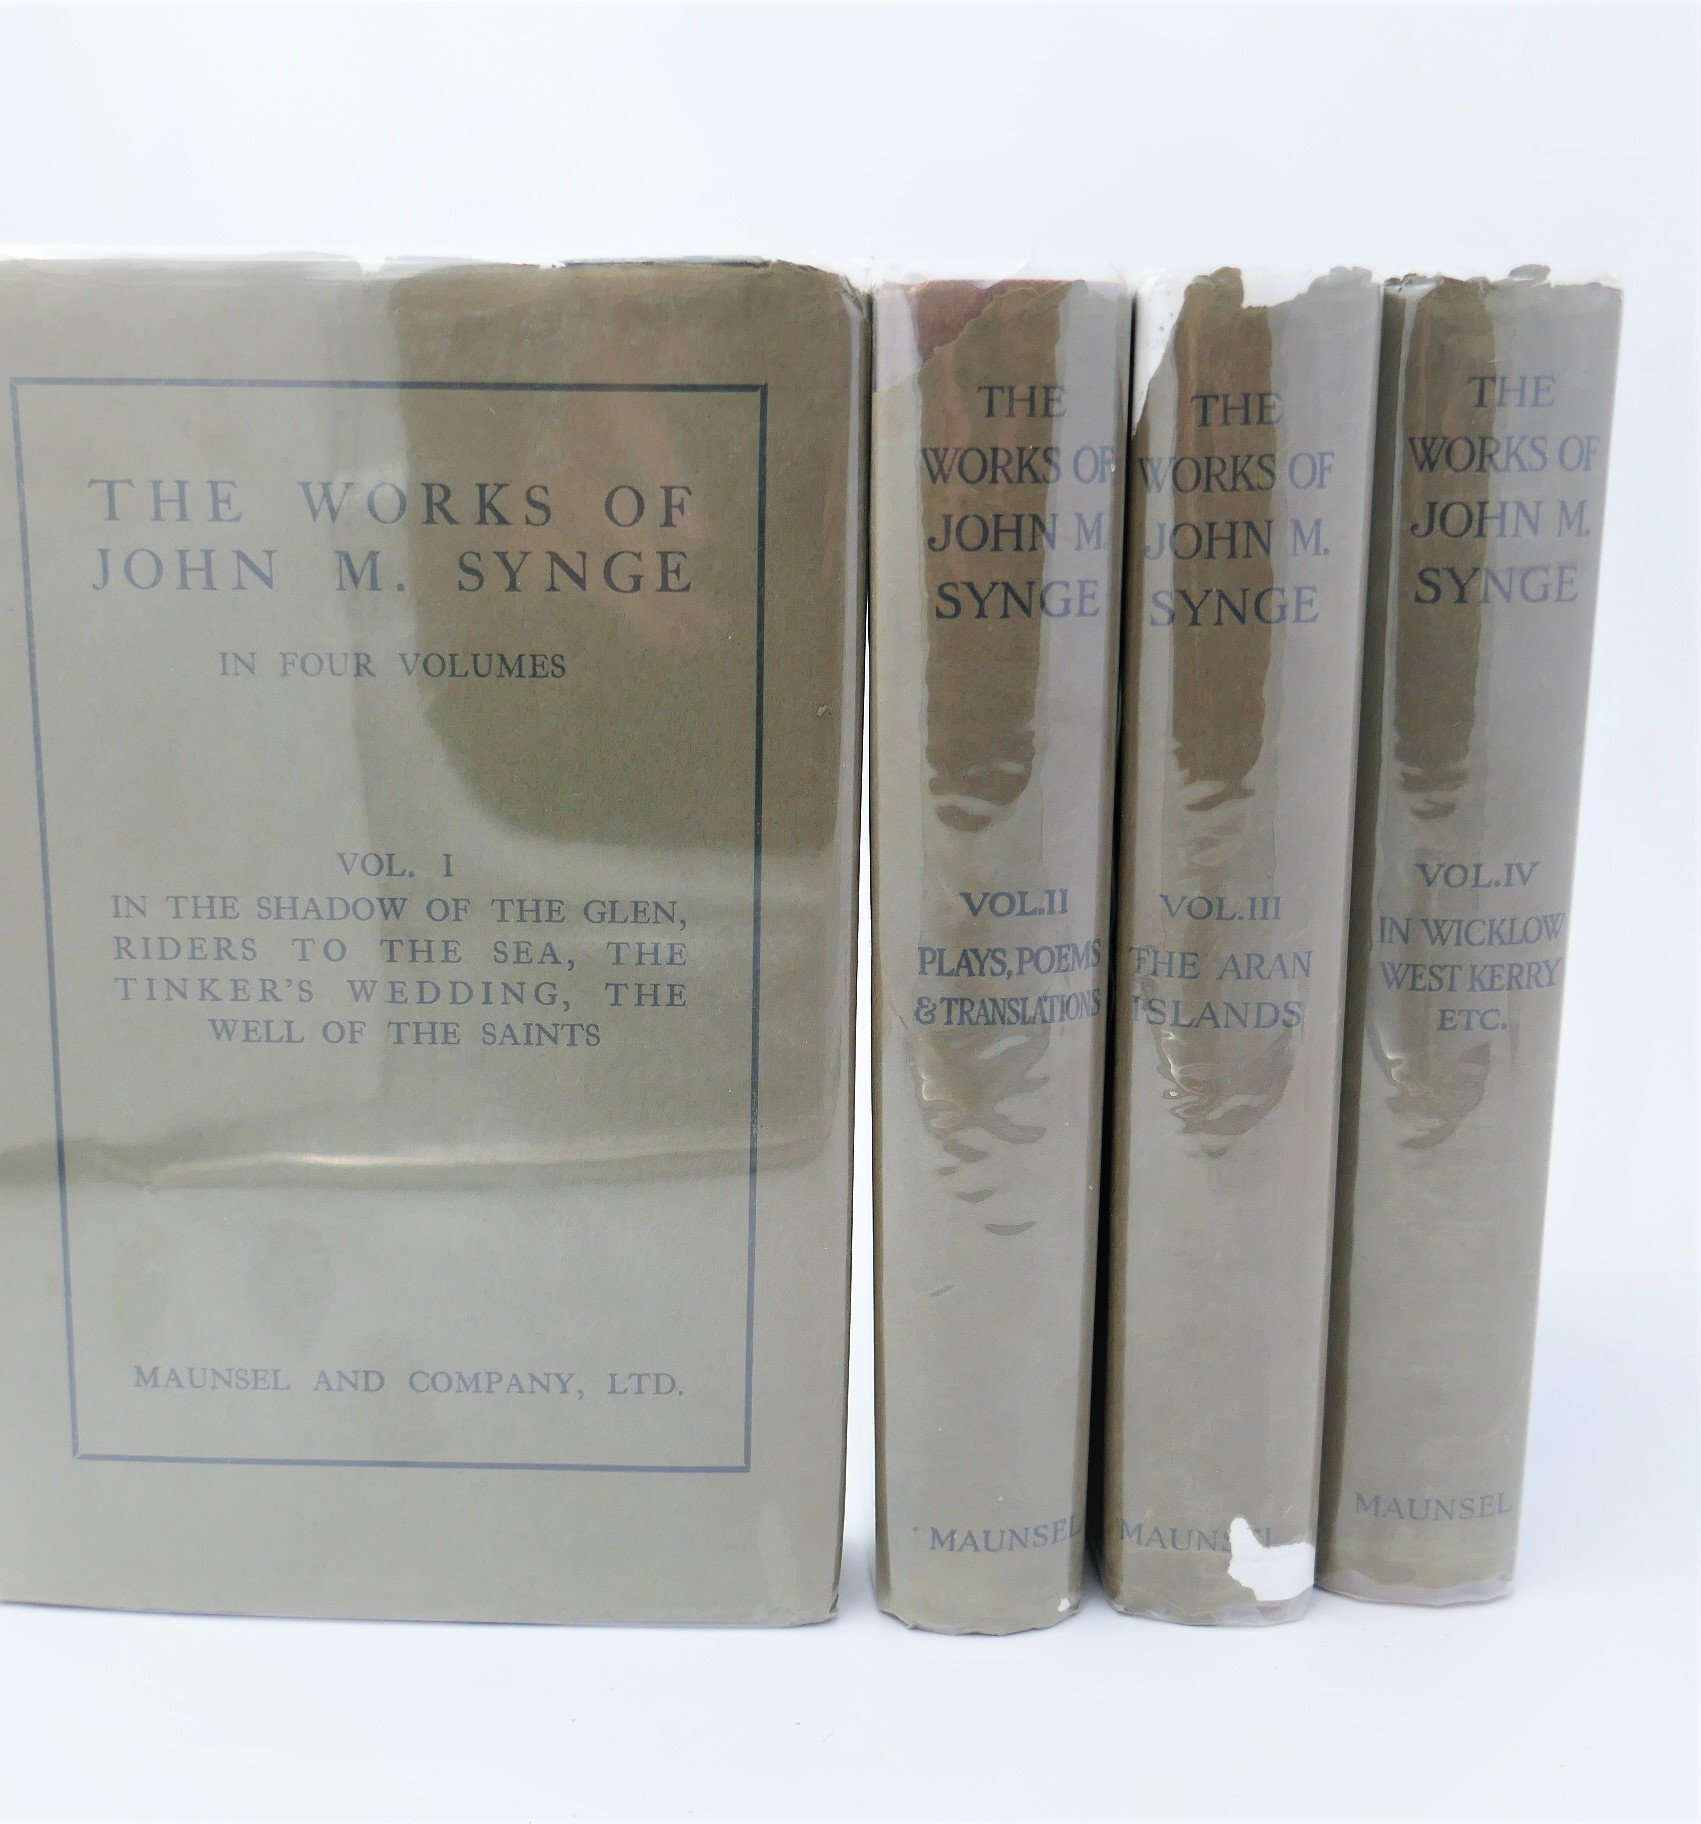 The Works of John M. Synge. Four Volumes (1910) by John M. Synge